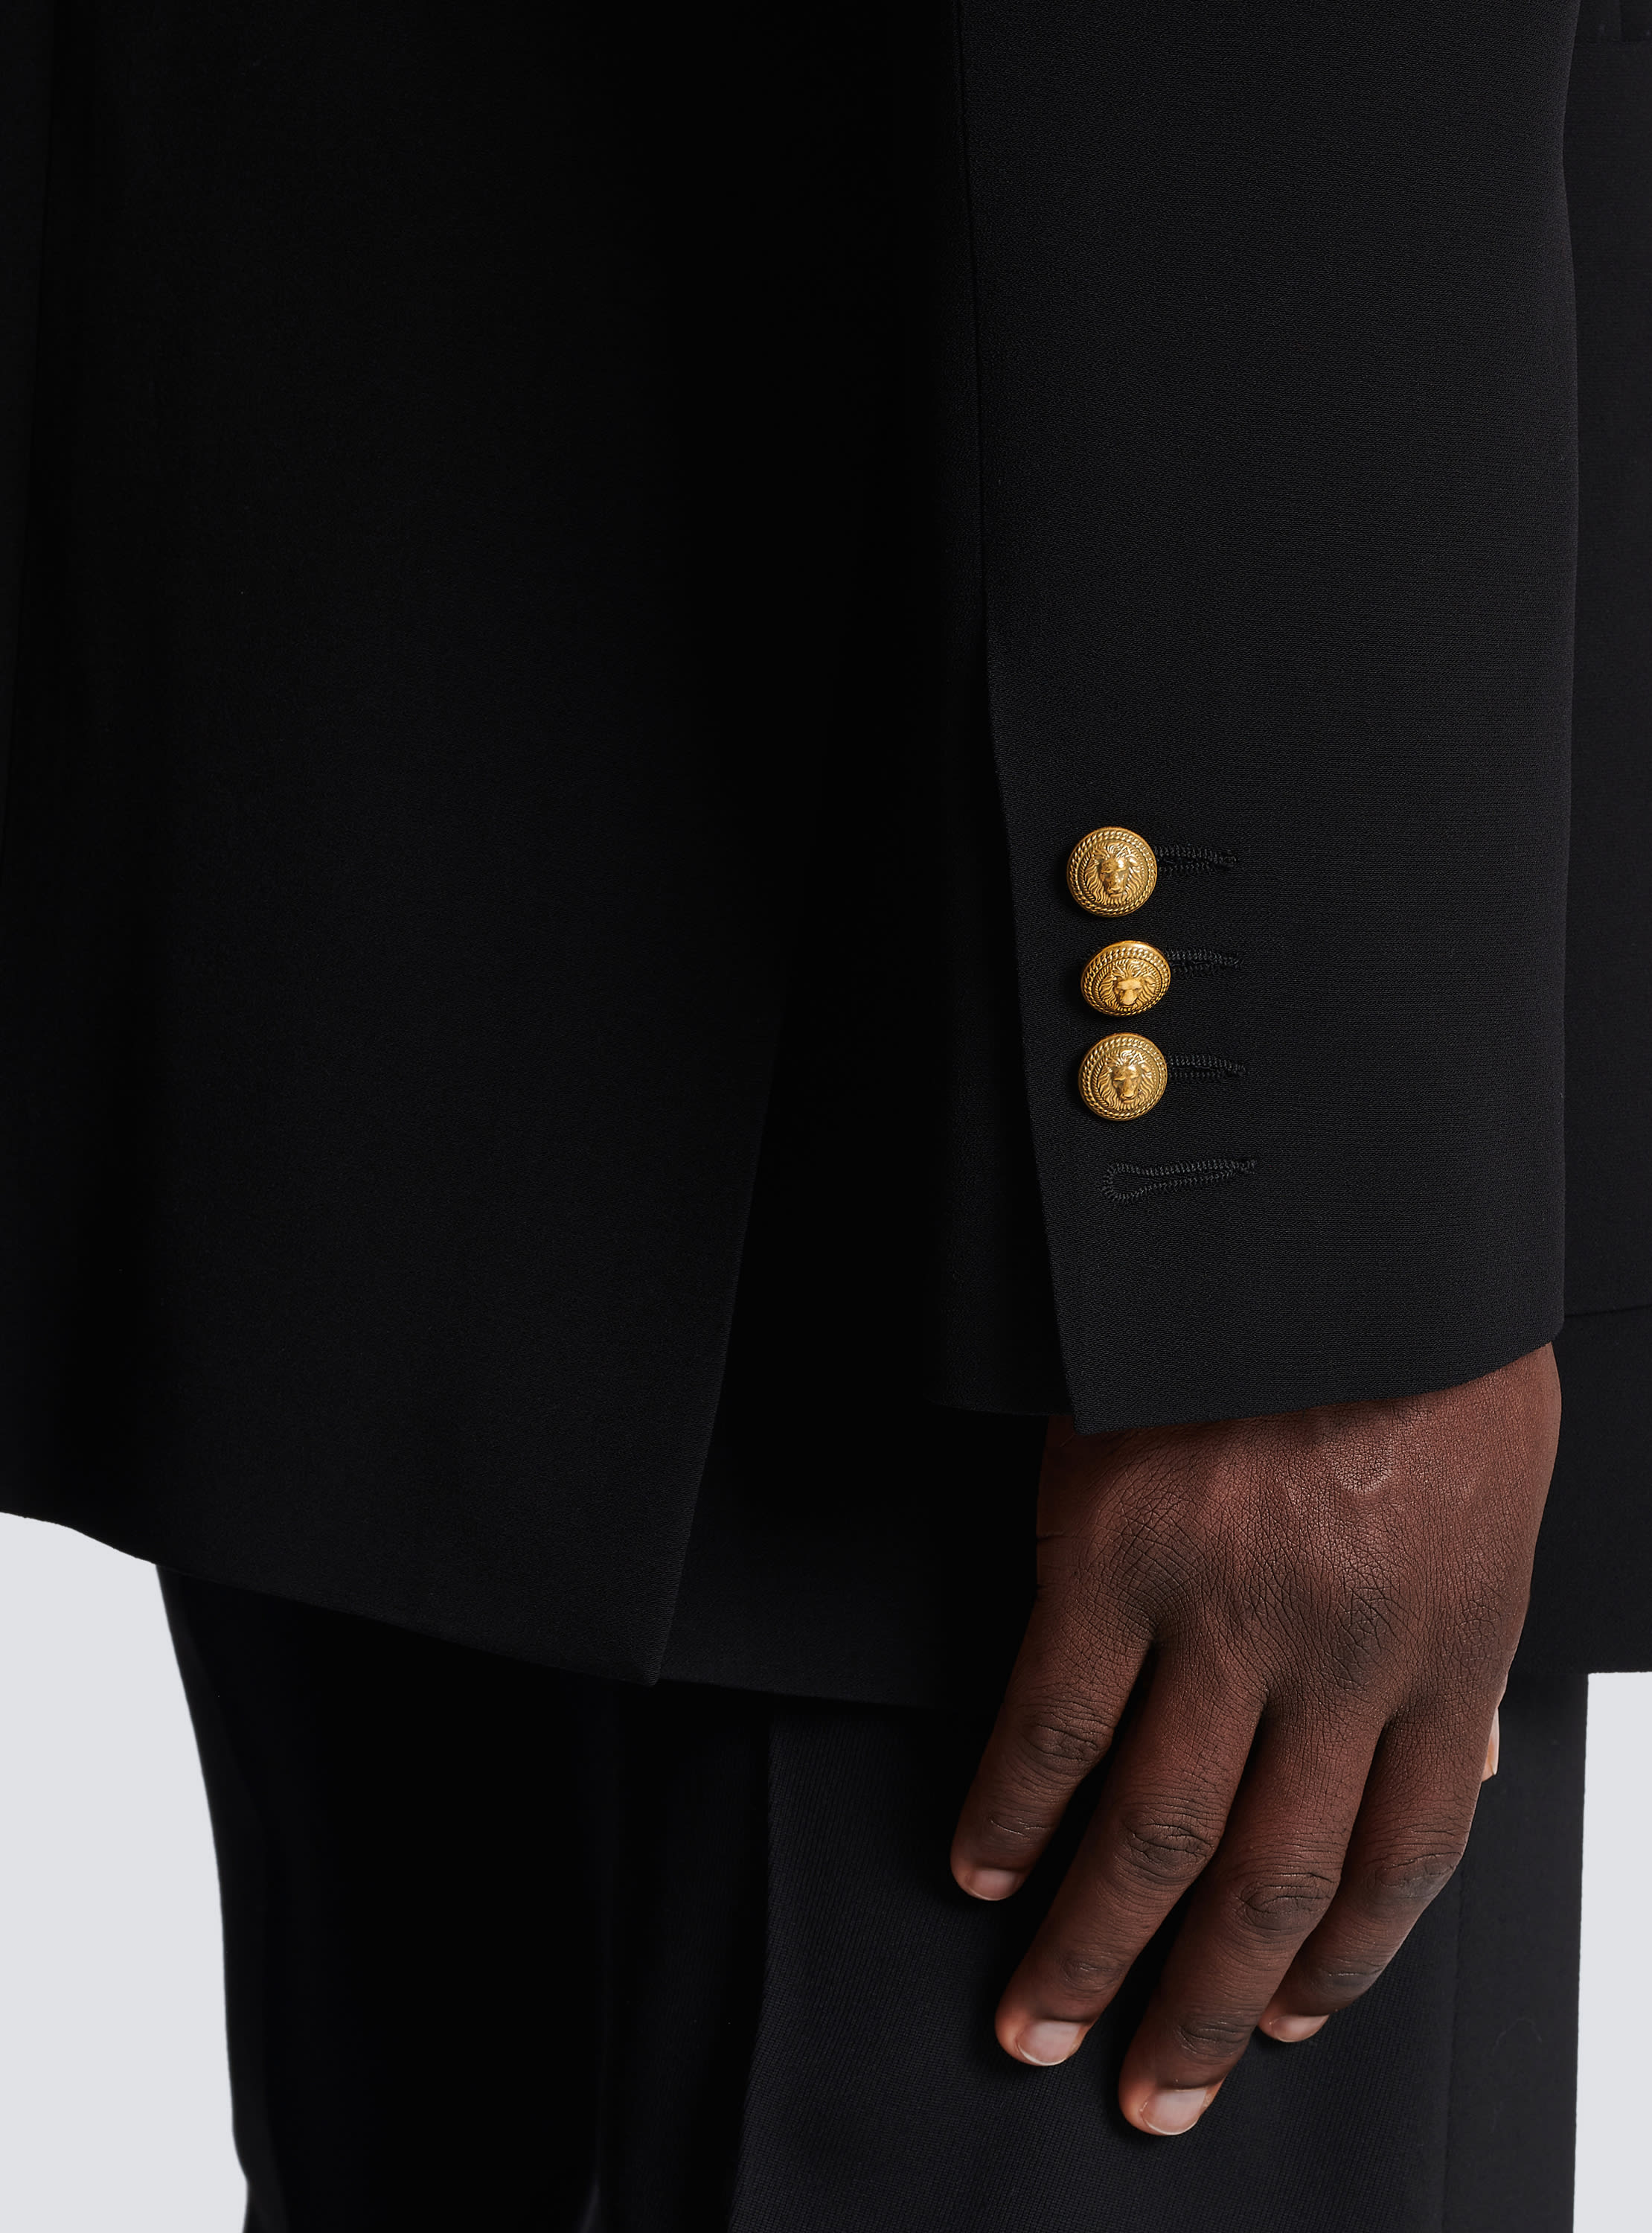 BALMAIN Embellished stretch-crepe blazer